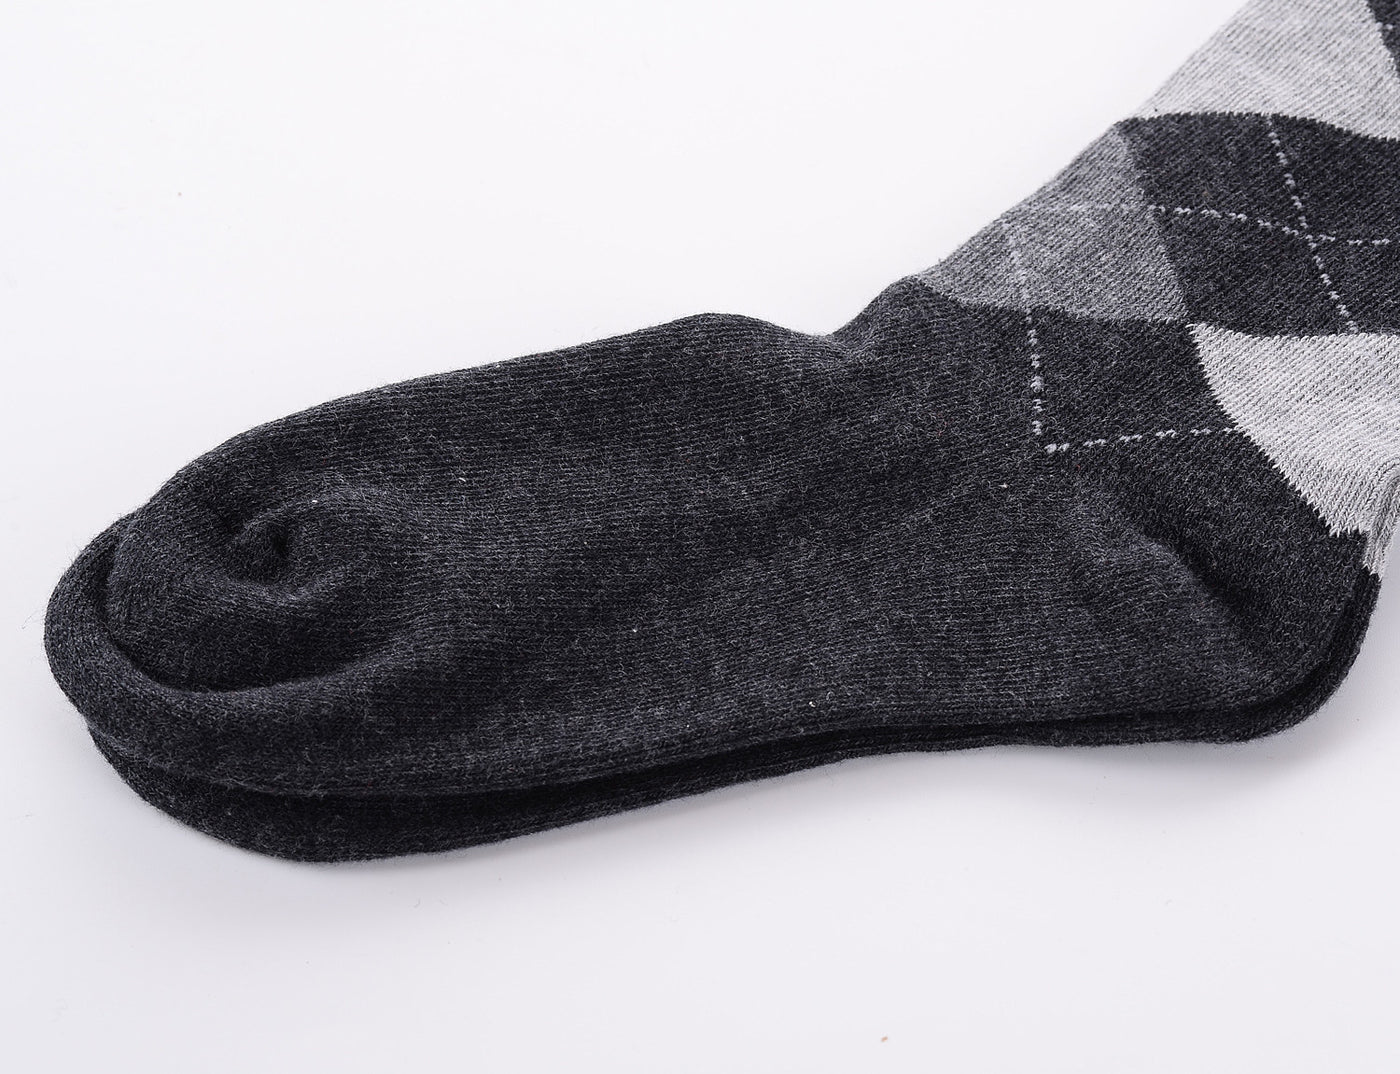 Finest Combed Cotton Thigh High socks - Diamond Black